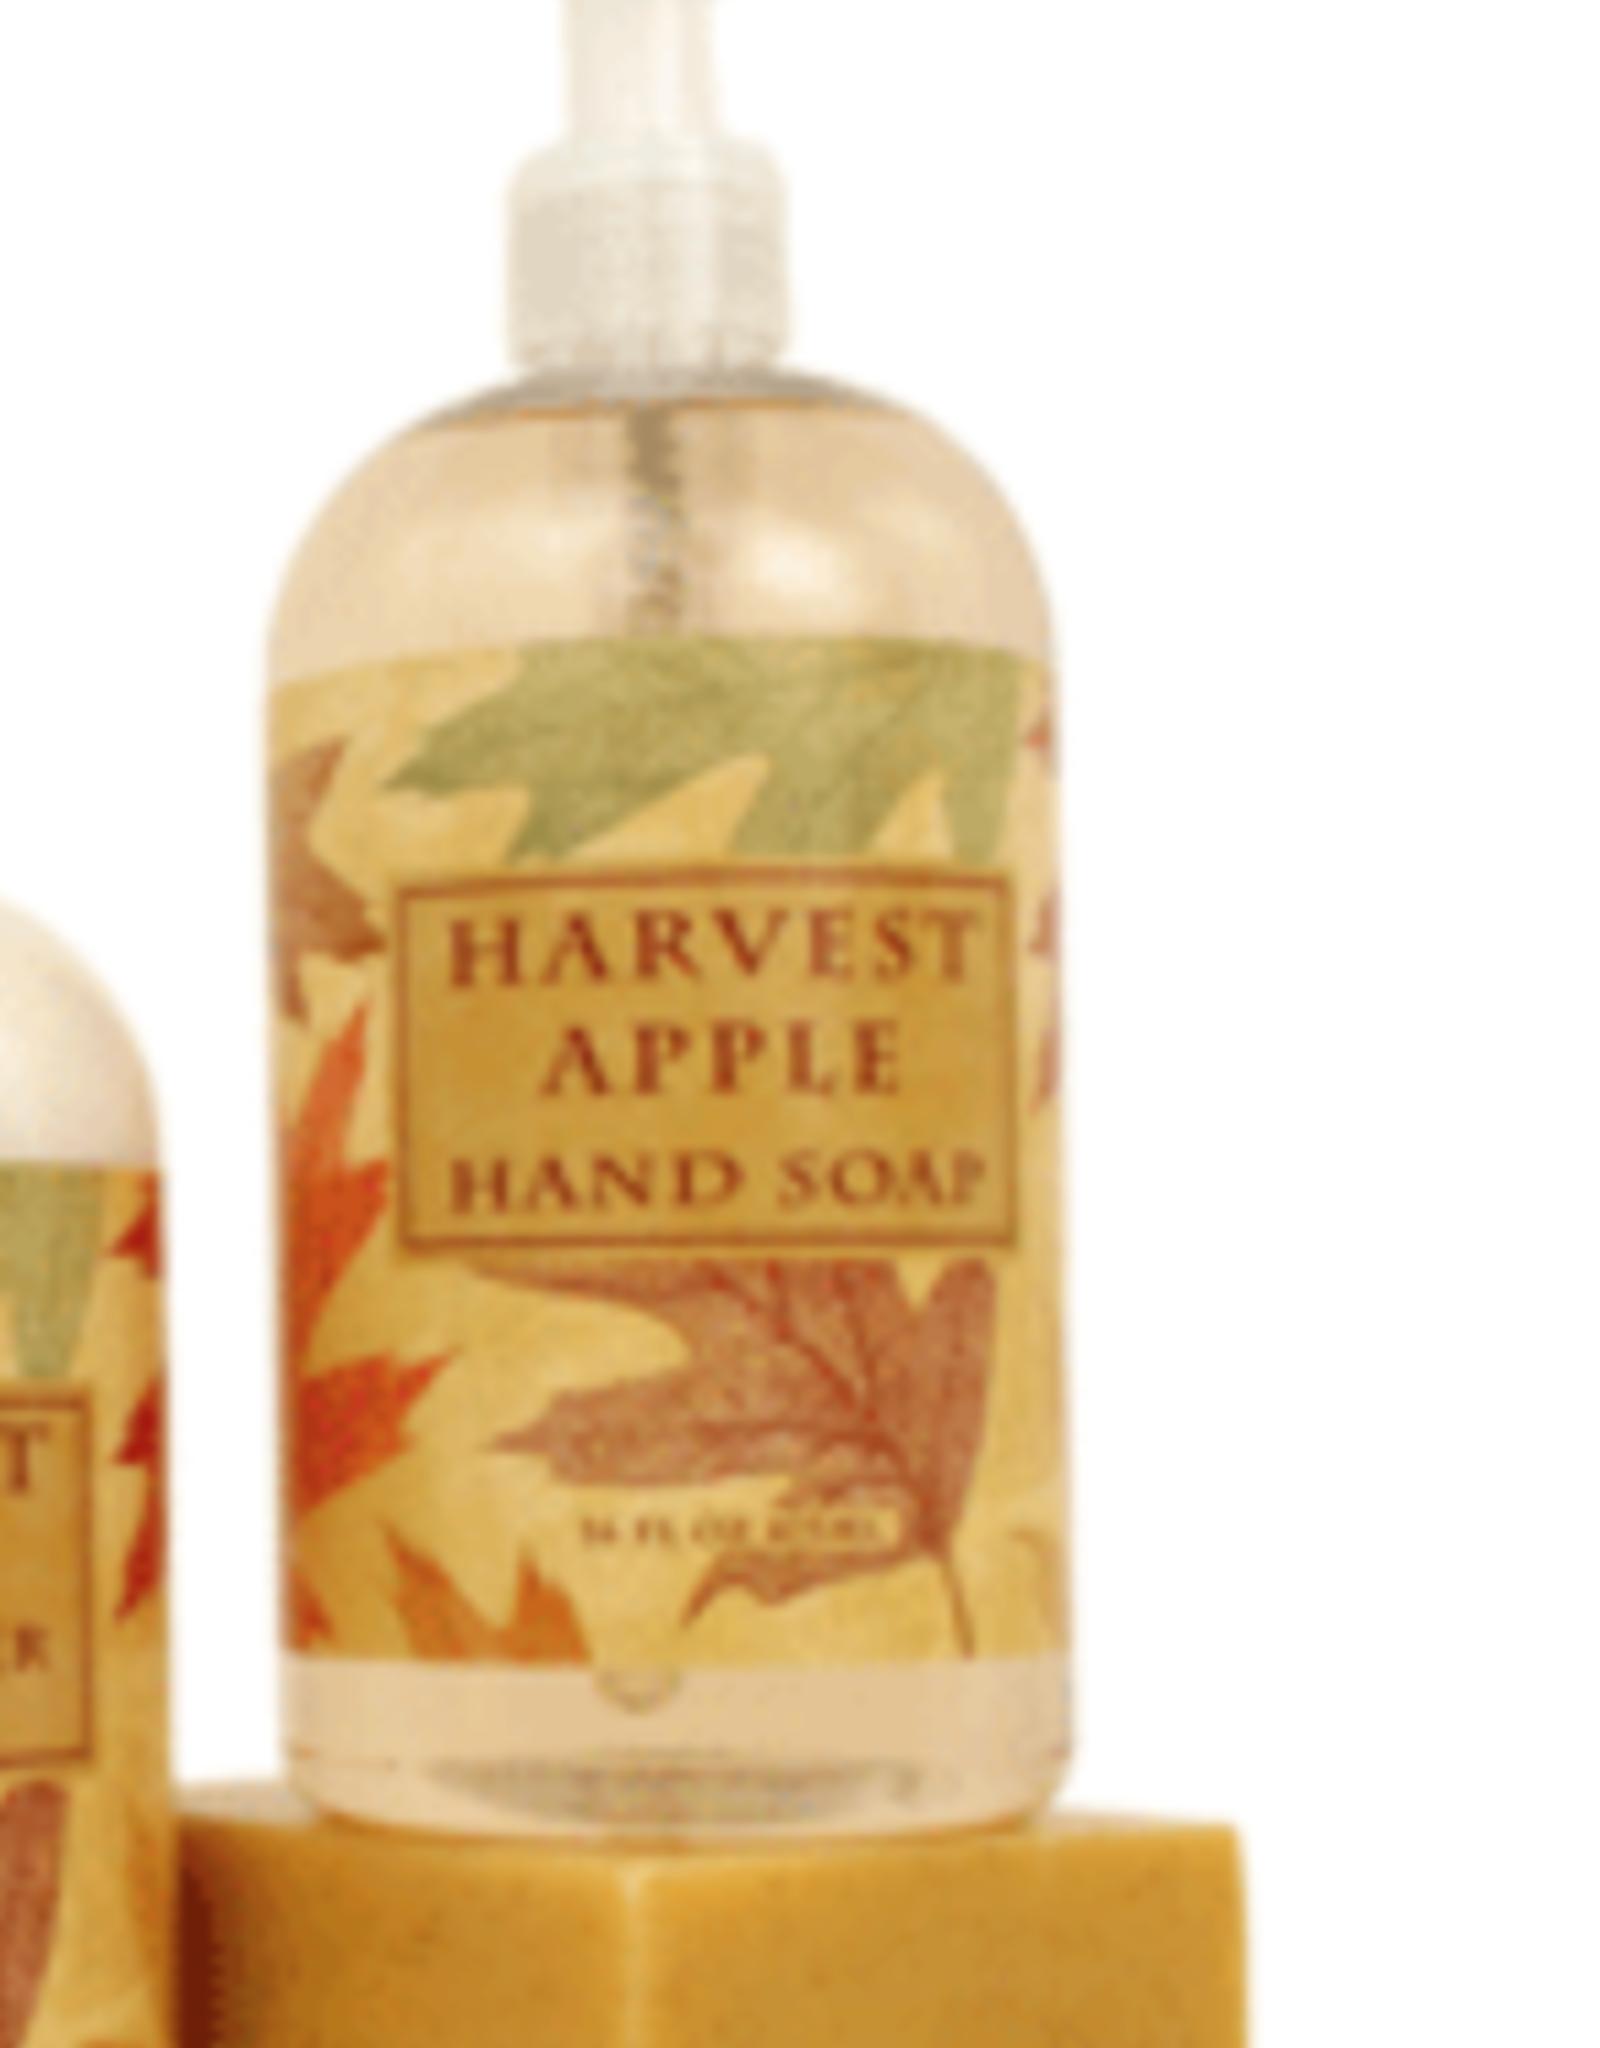 Fall Greenwich Bay - Harvest Apple Hand Soap 16oz